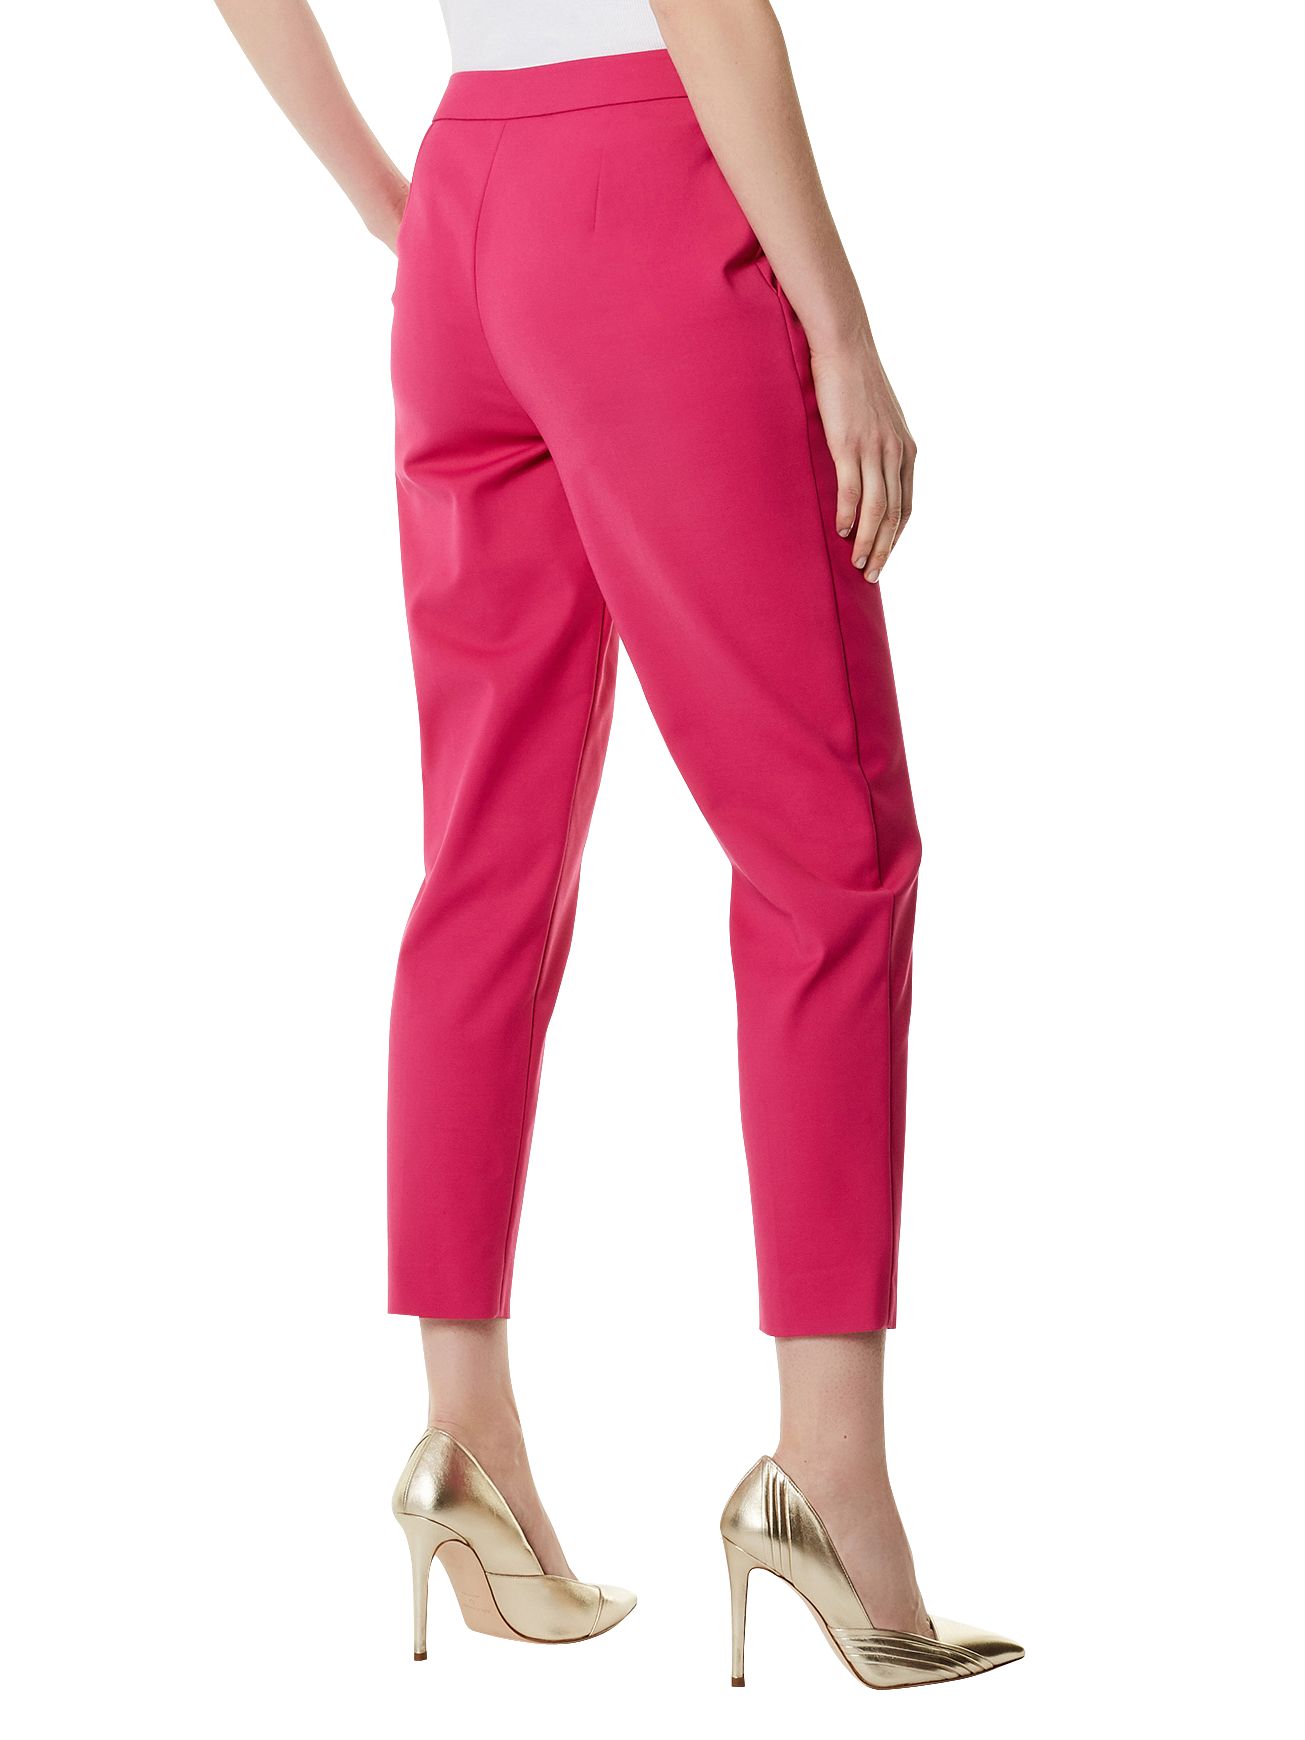 Karen Millen Tailoring Trousers, Hot Pink at John Lewis & Partners